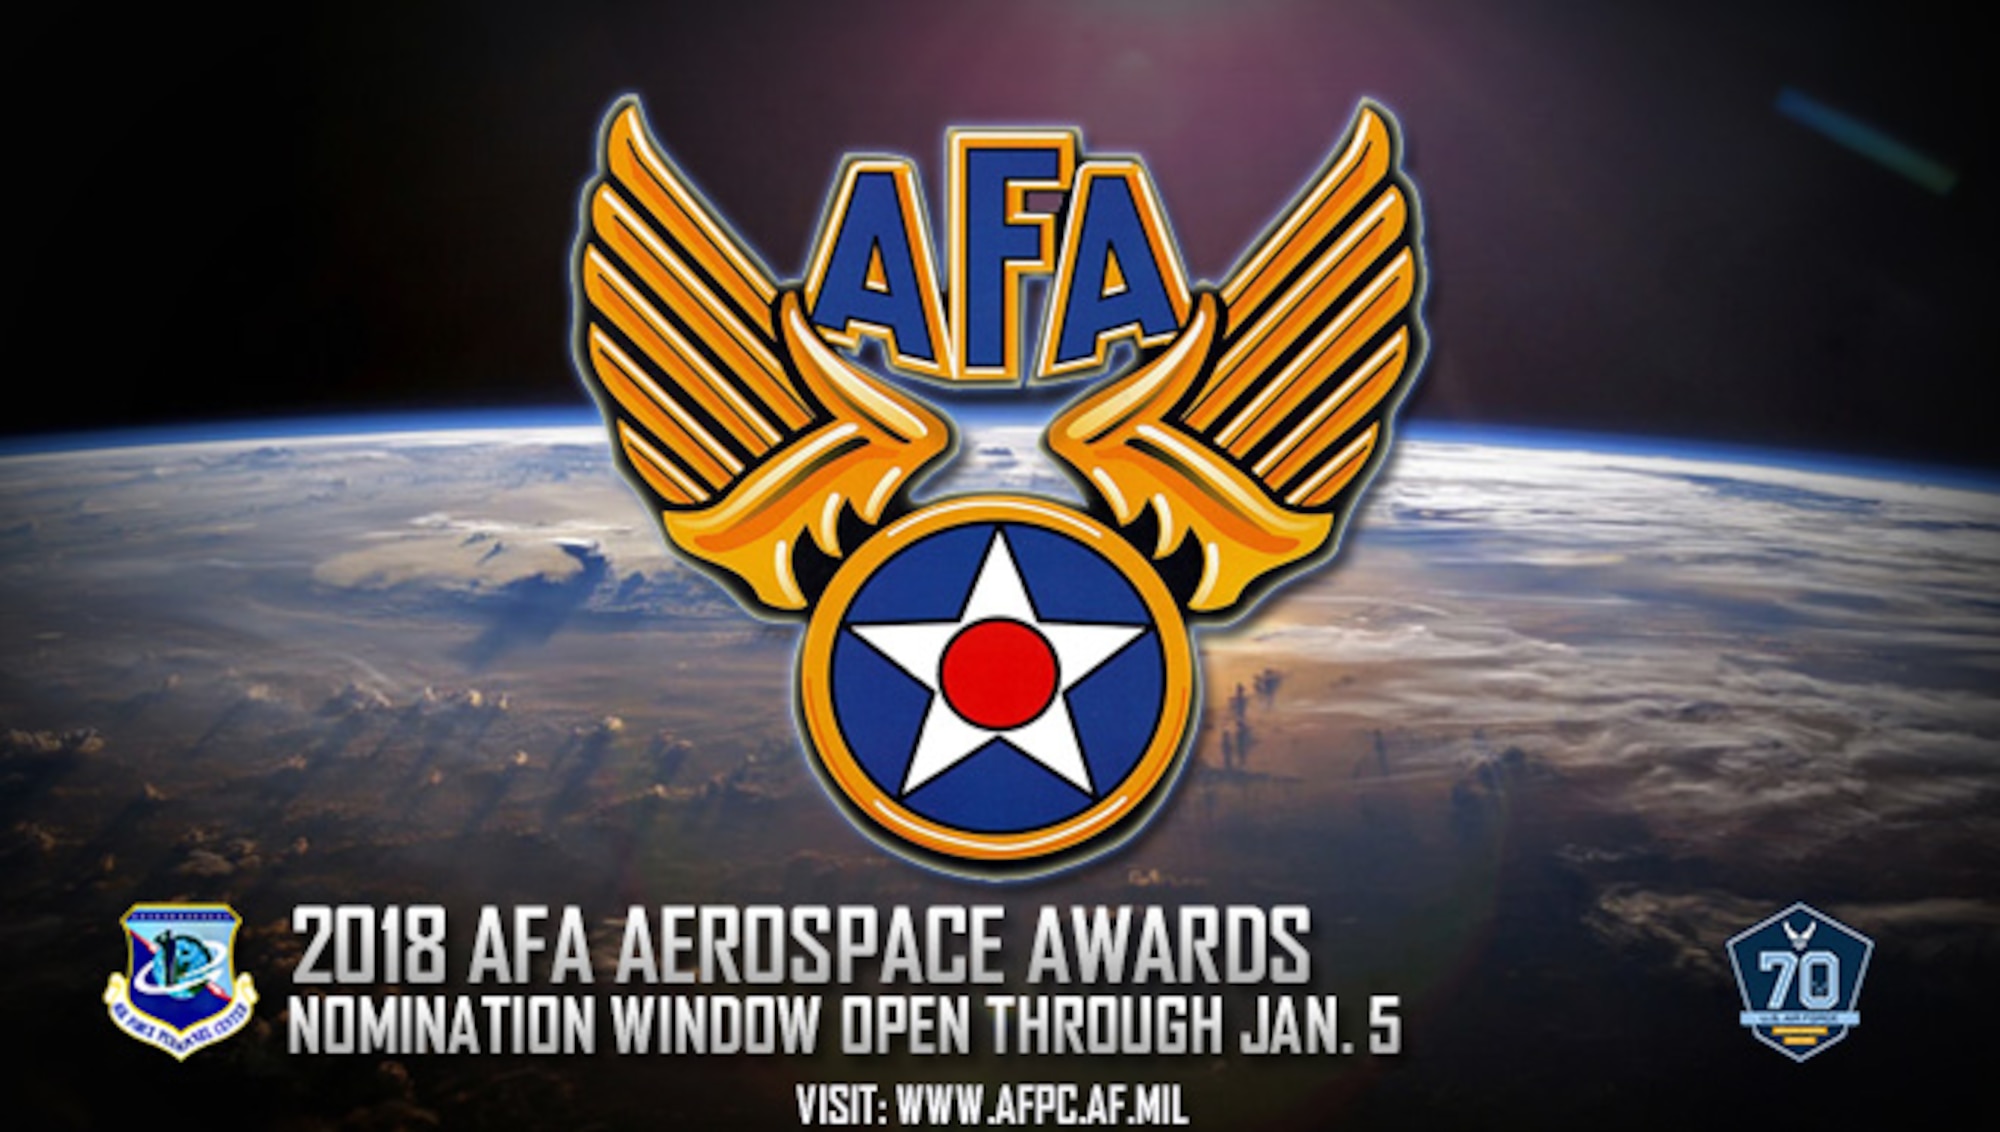 2018 AFA Aerospace Awards; nomination window open through Jan. 5